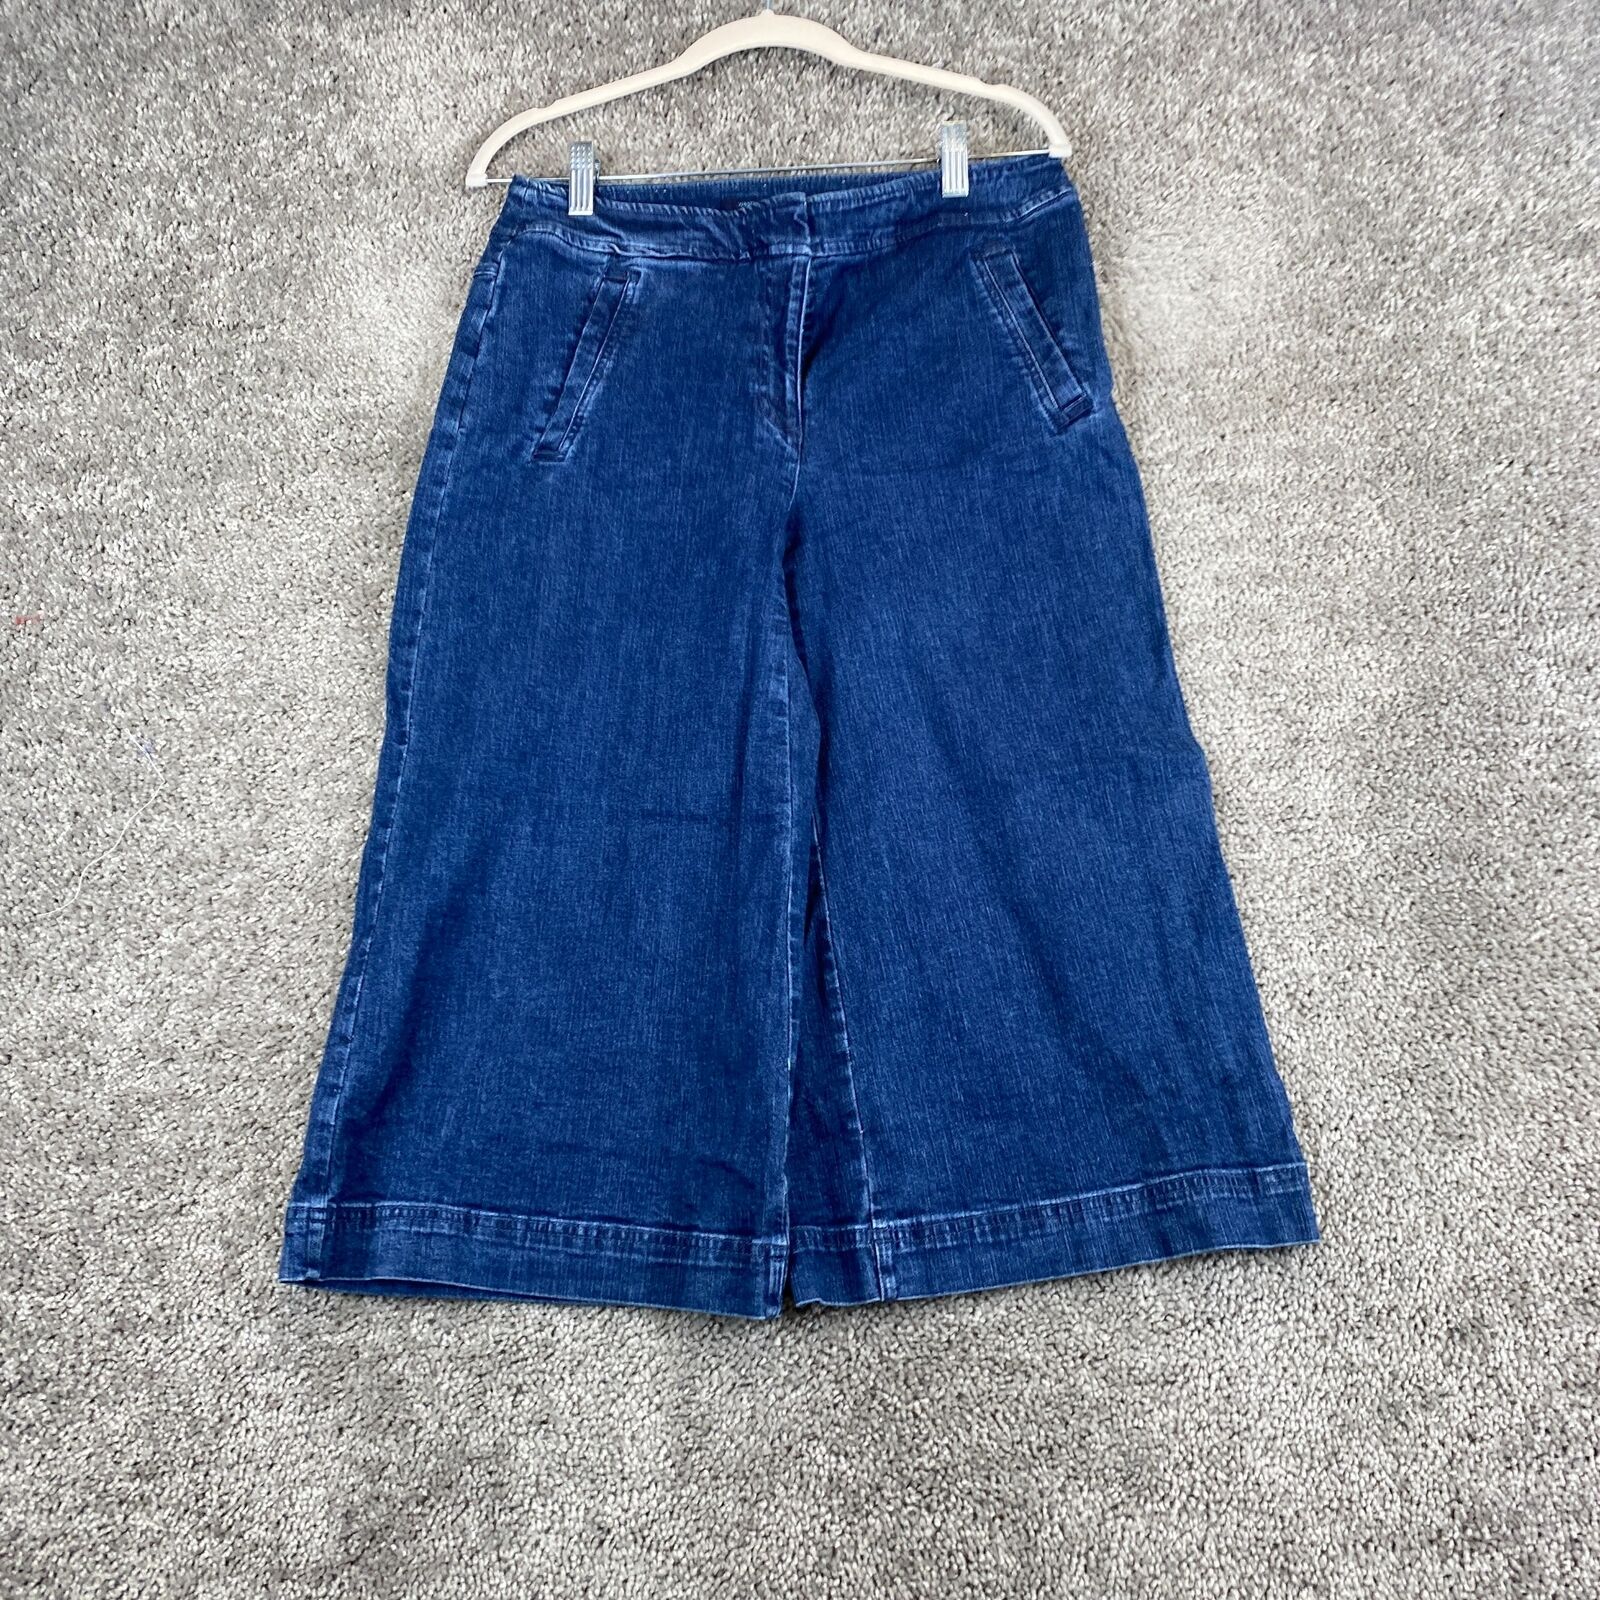 Westbound Stretch Wide Leg Capri Jeans Women's 8 Blue Denim Mid Rise Dark Wash